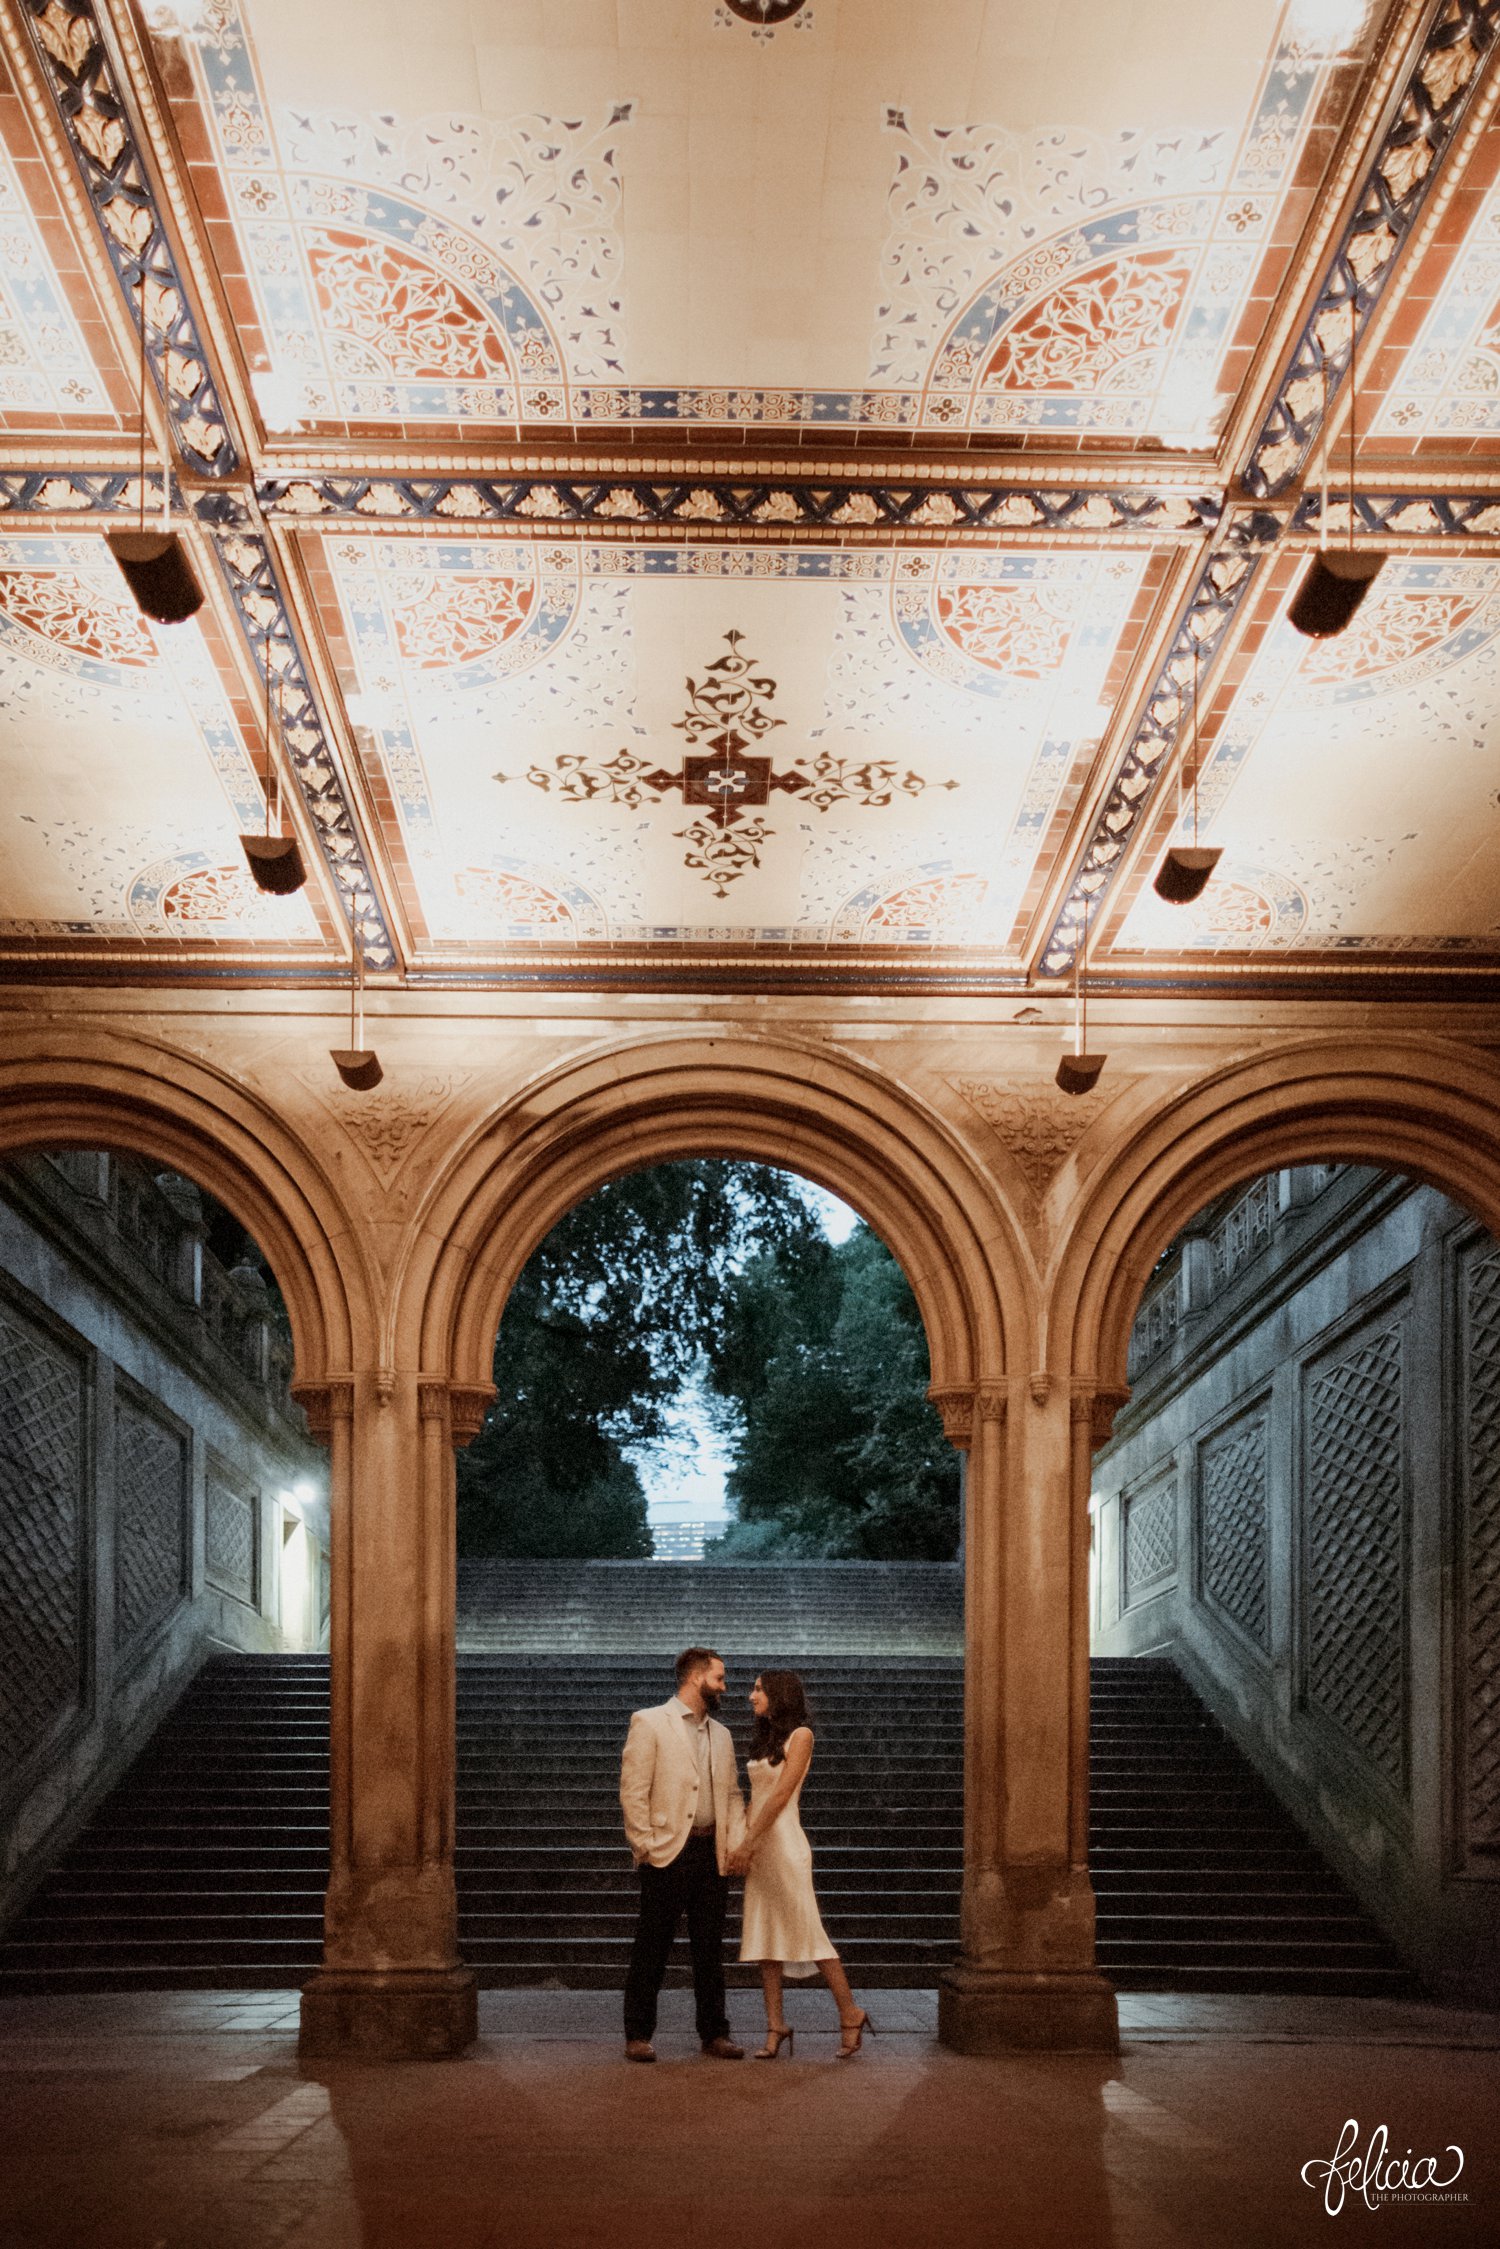  images by feliciathephotographer.com | destination wedding photographer | elopement | new york city | second look | bethesda | central park | detailed ceiling | symmetry | architecture | romantic | classic | cowl neck dress | 